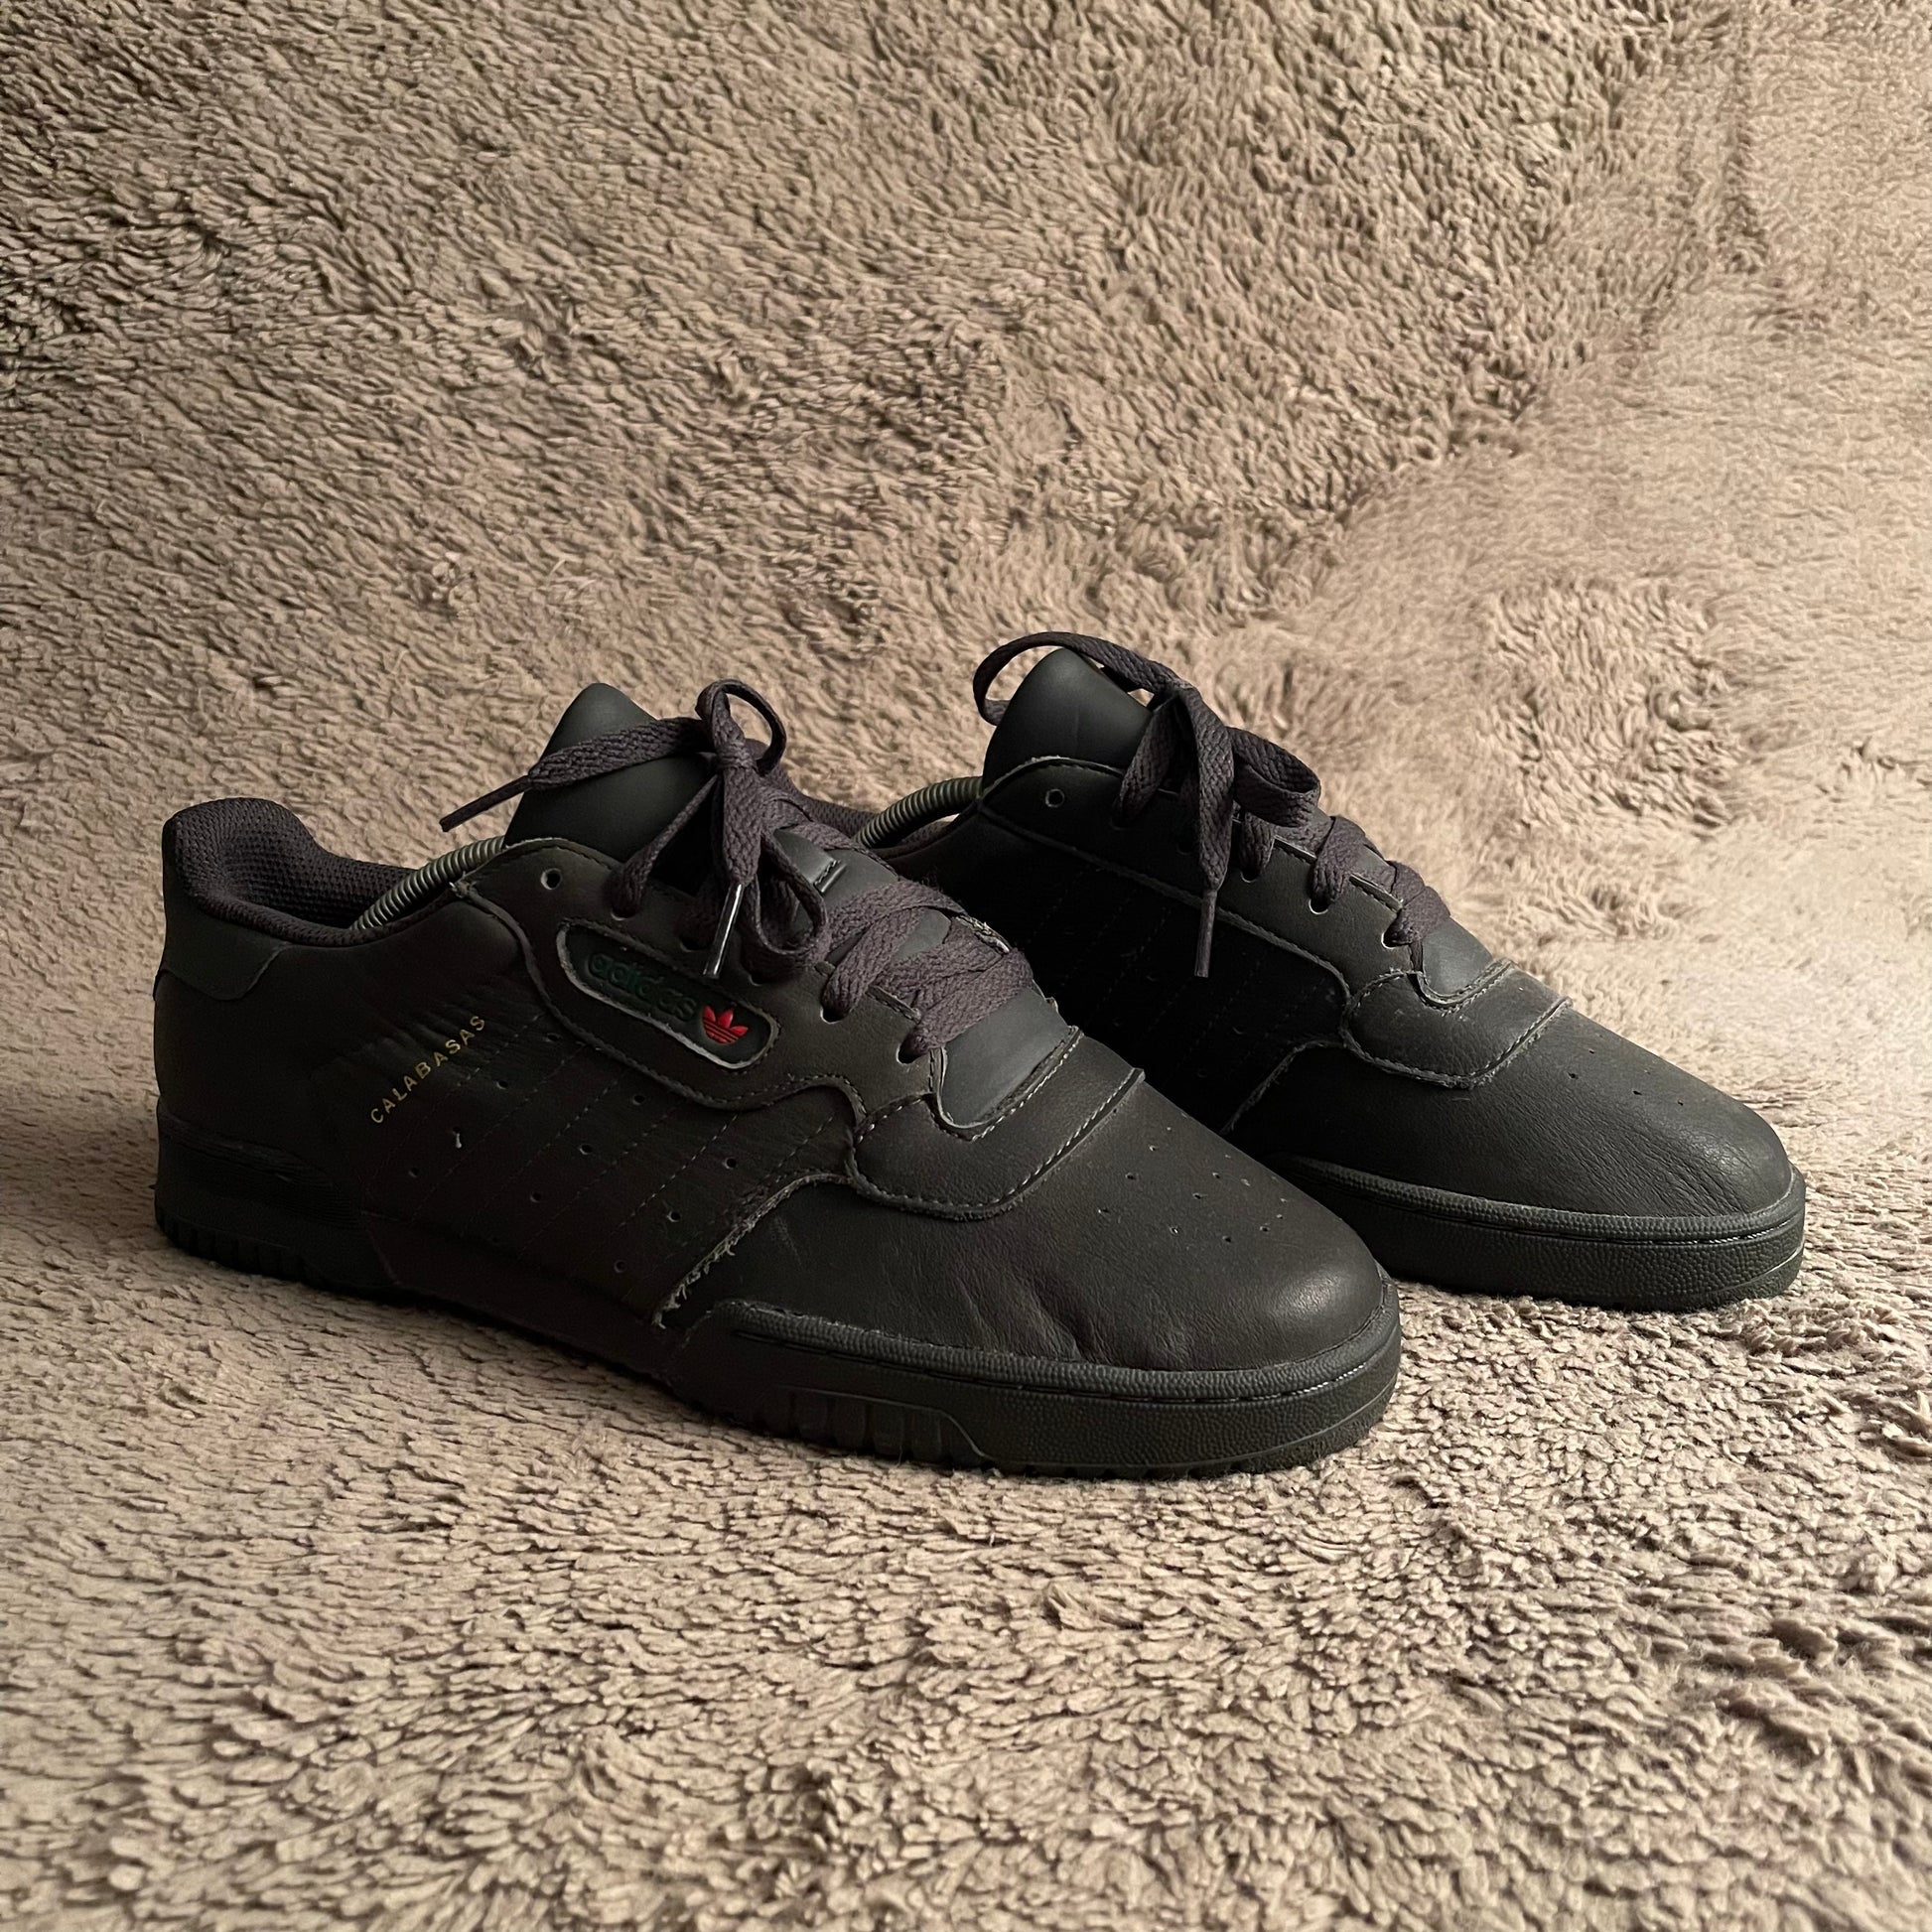 Compasión Limitado Lo dudo YEEZY Powerphase Calabasas "Core Black" Sneakers (US 11) – ThriftsomeDXB